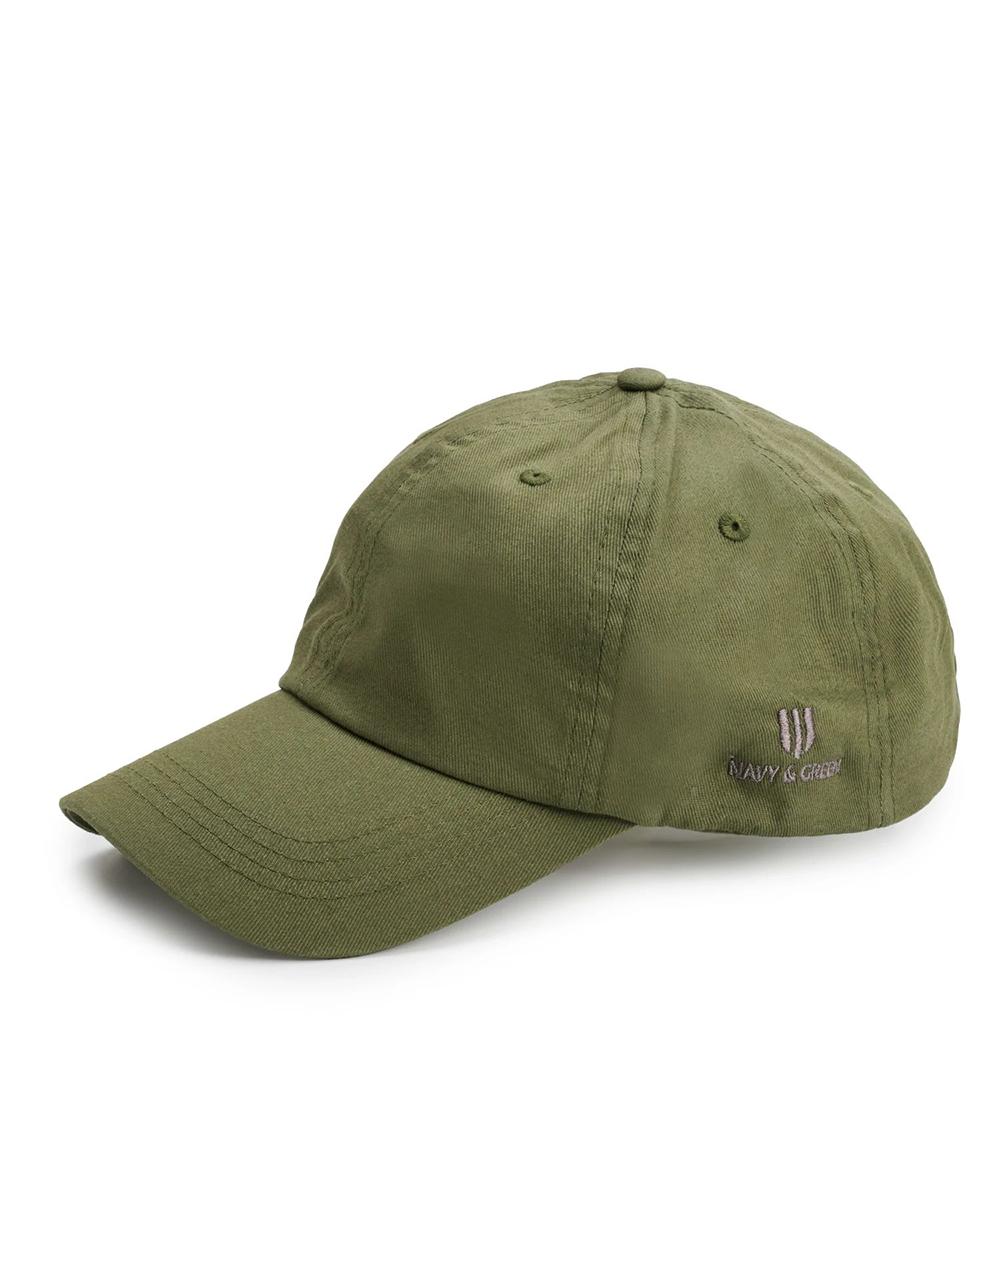 NAVY&GREEN HAT